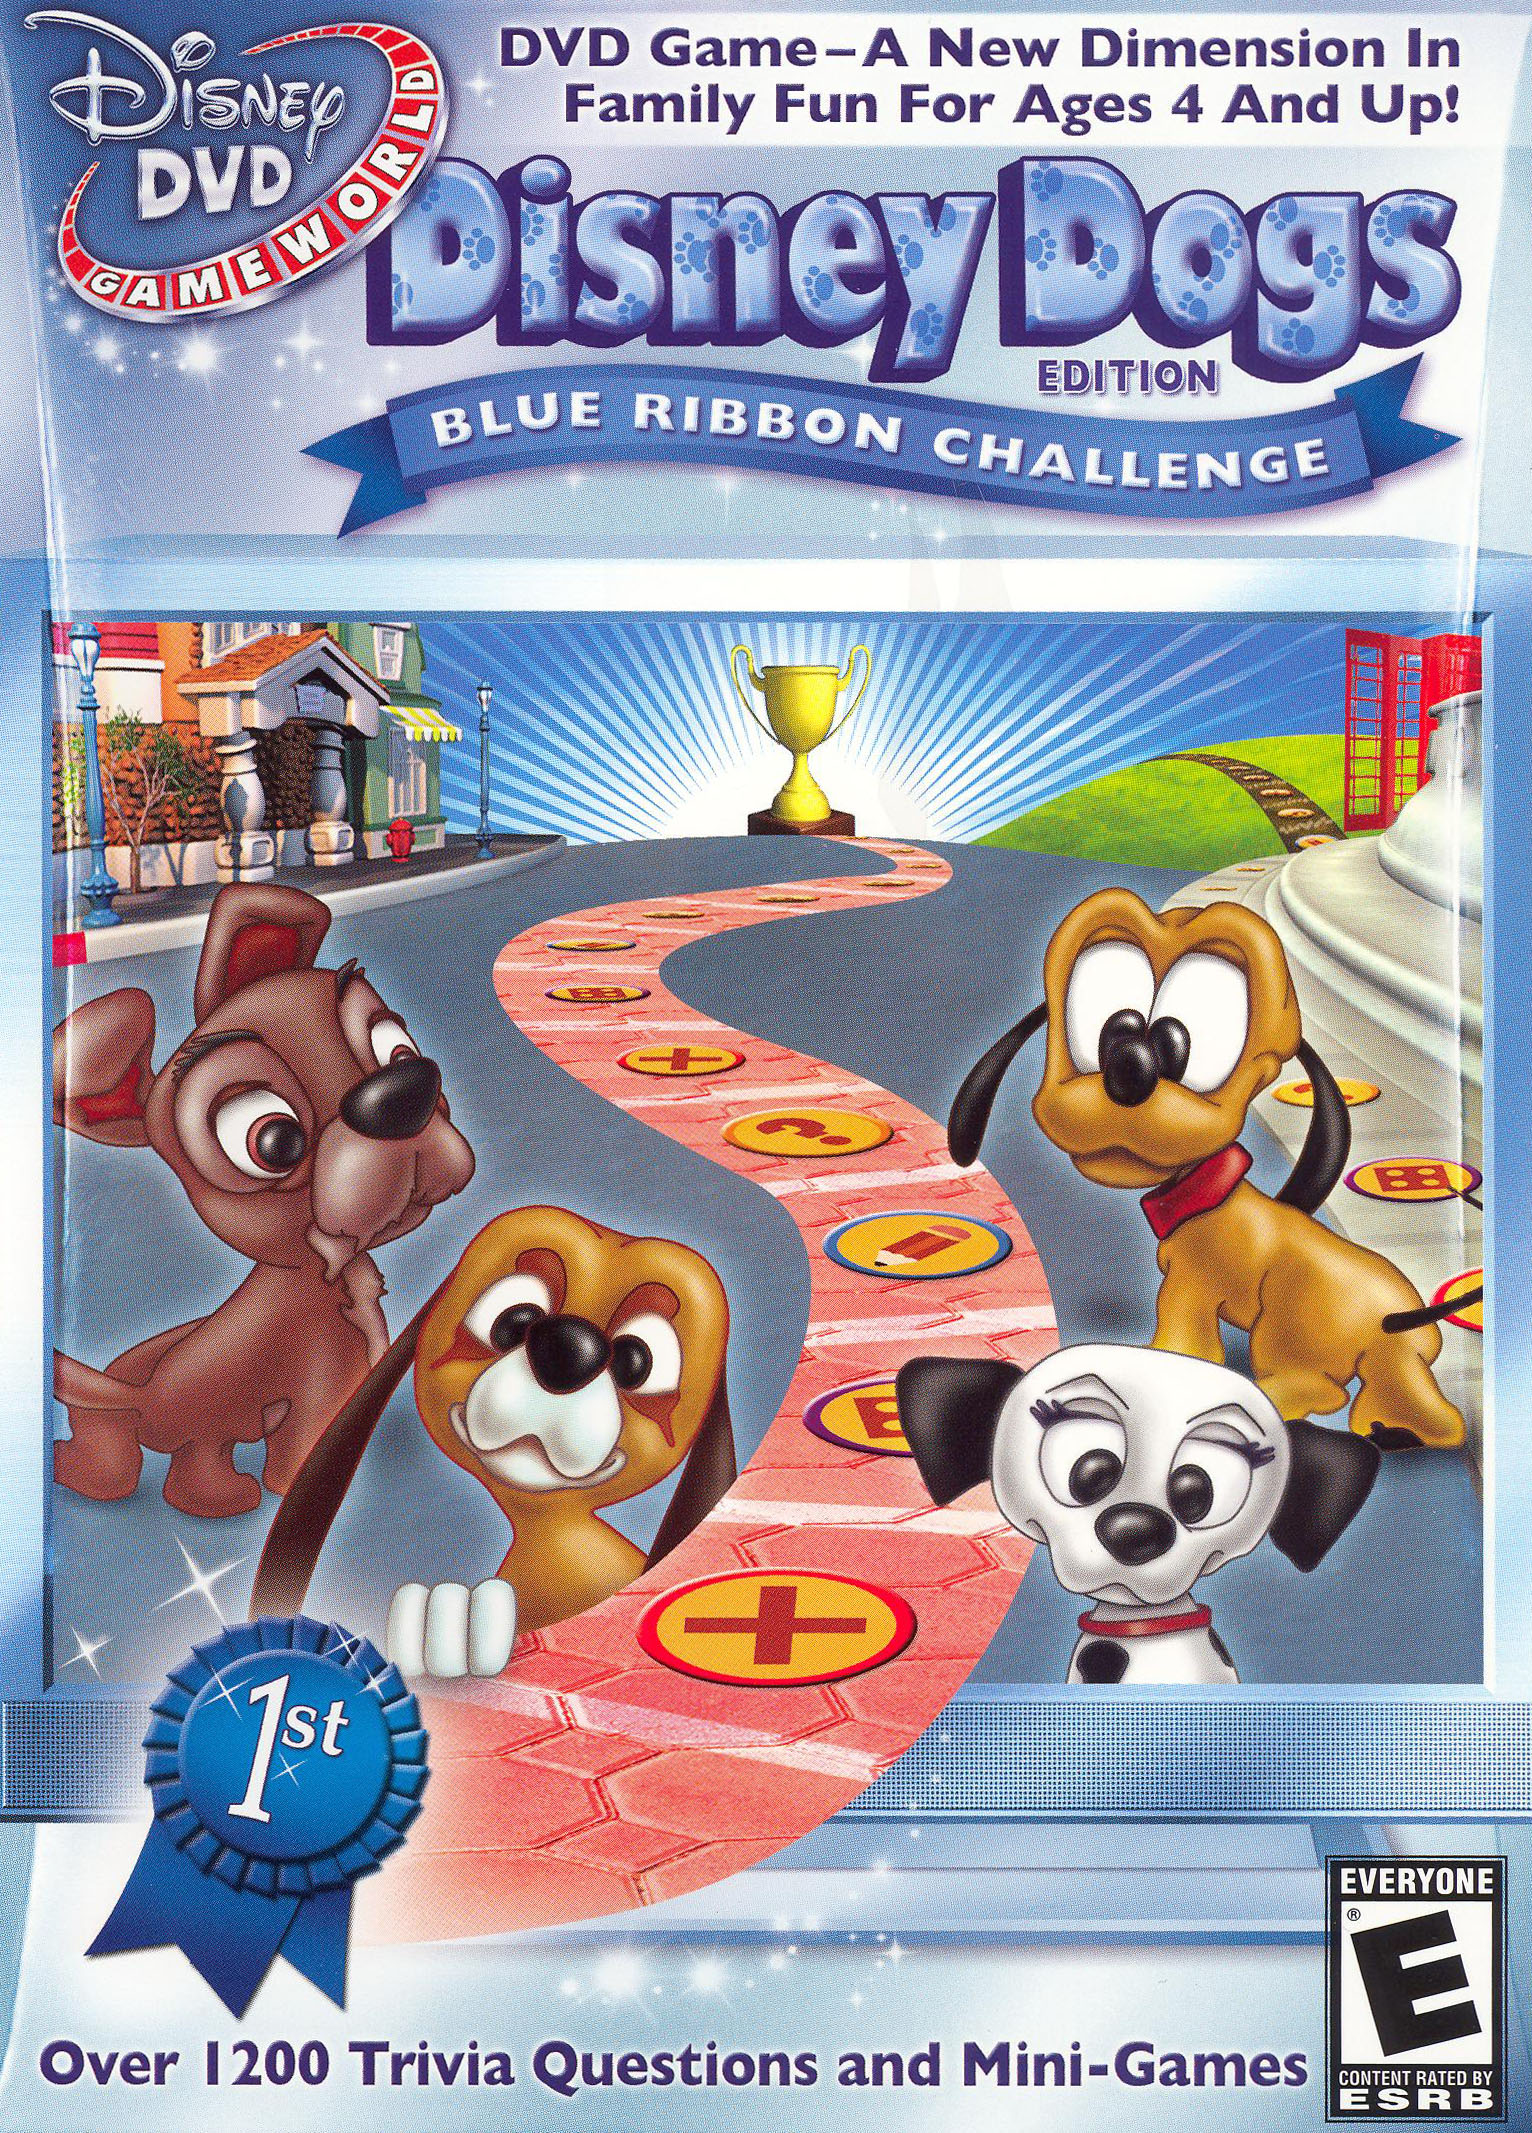 Disney DVD Game World: Dogs Edition [DVD] [2006] - Best Buy